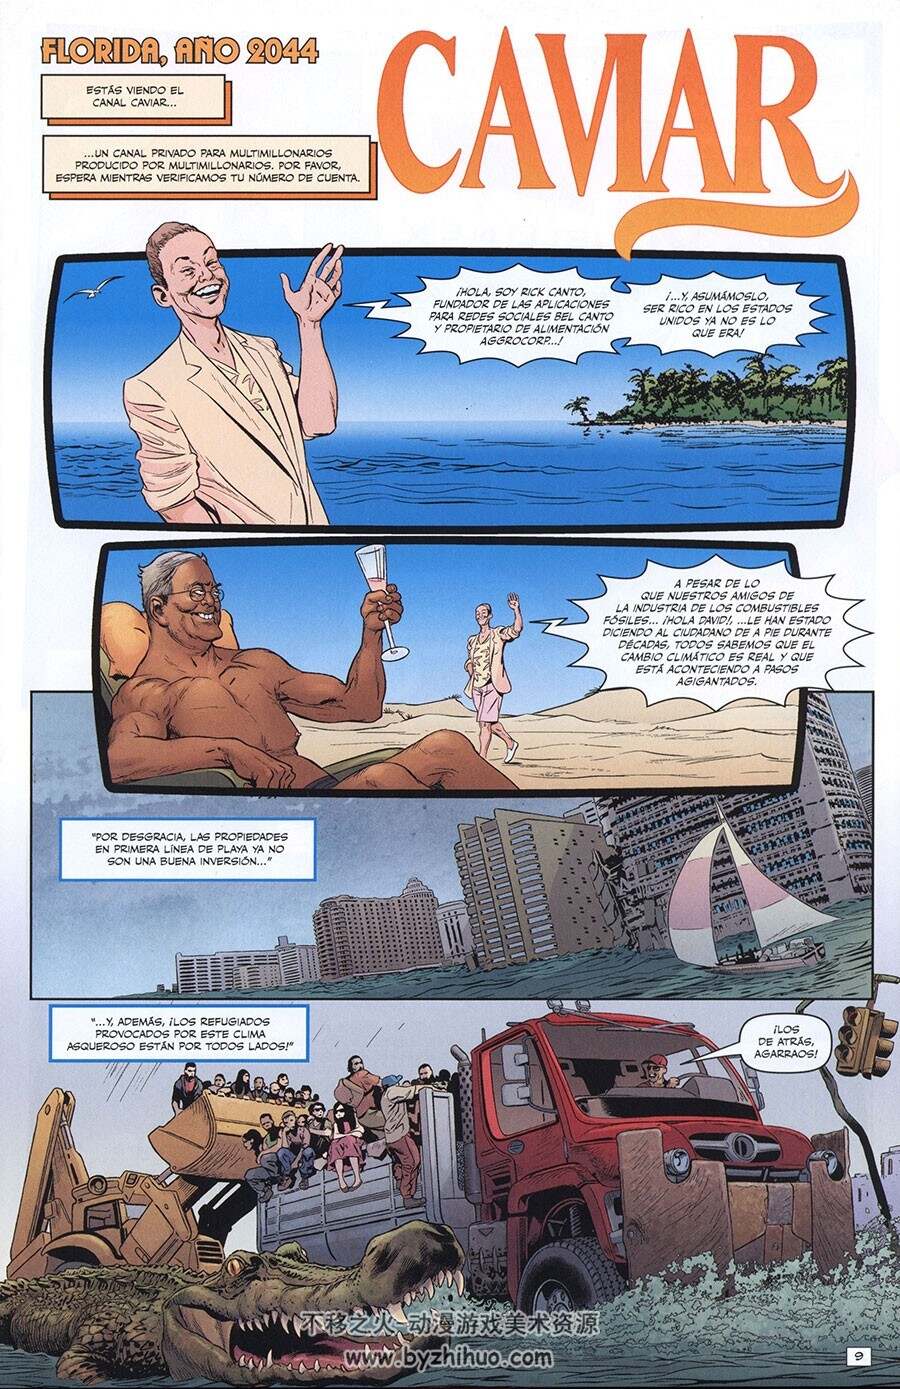 Billionaire Island 漫画 百度网盘下载